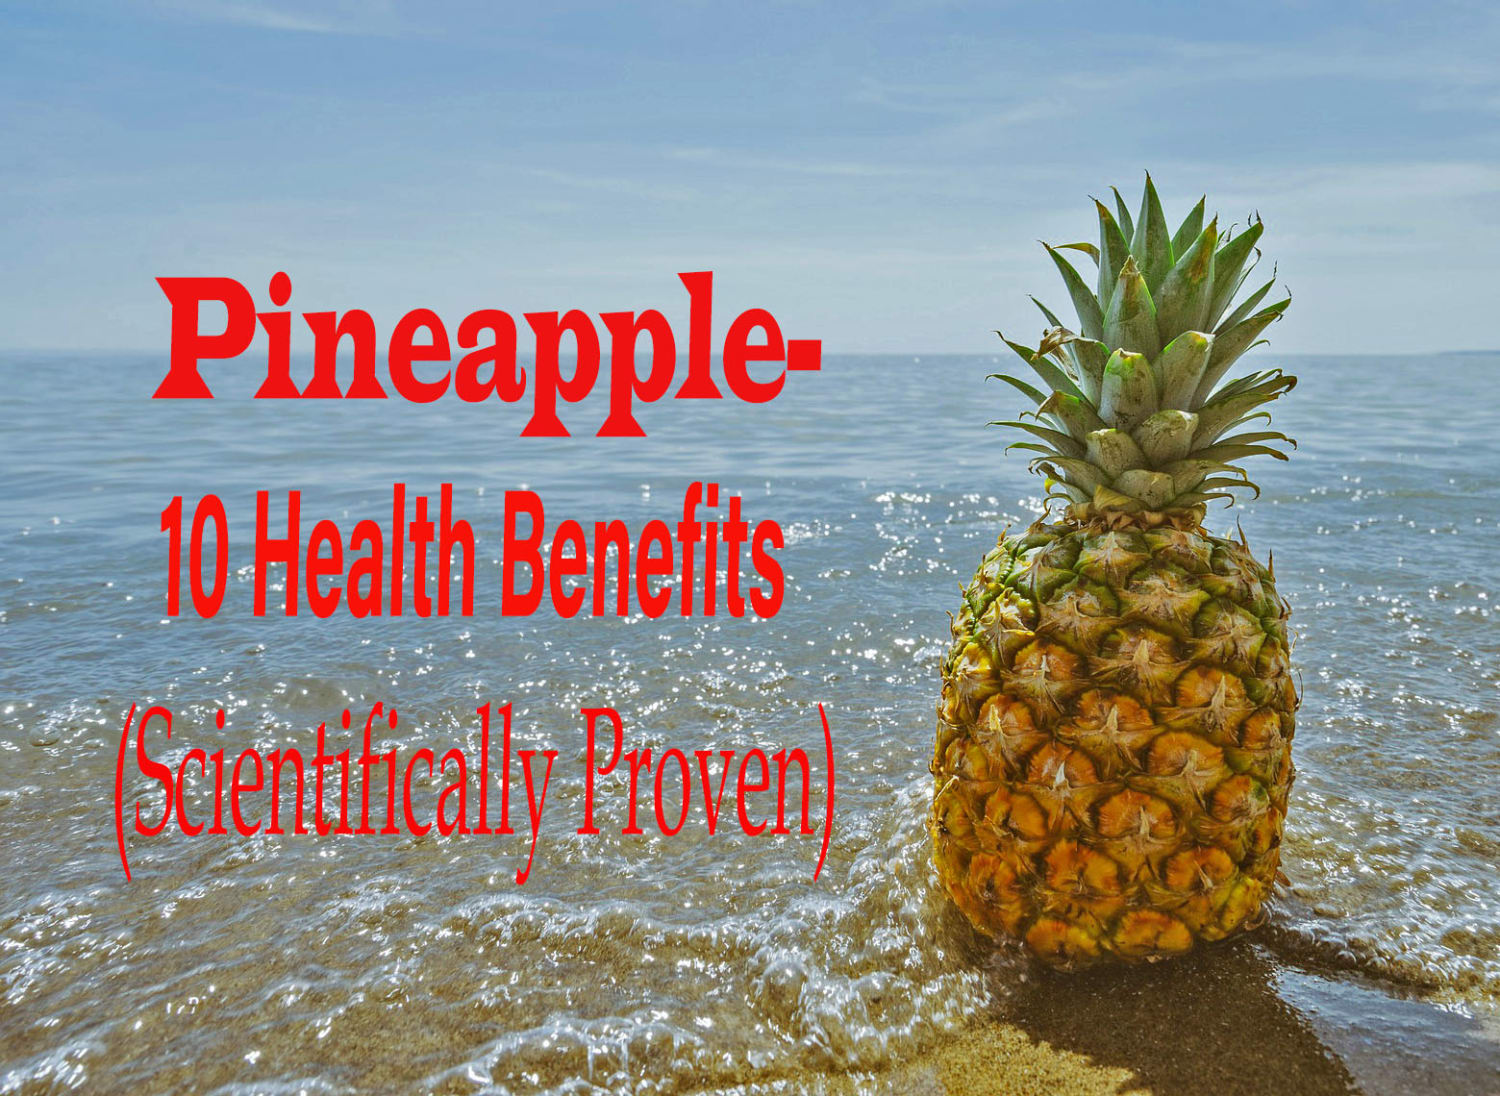 Pineapple-10 Health Benefits (Scientifically Proven)